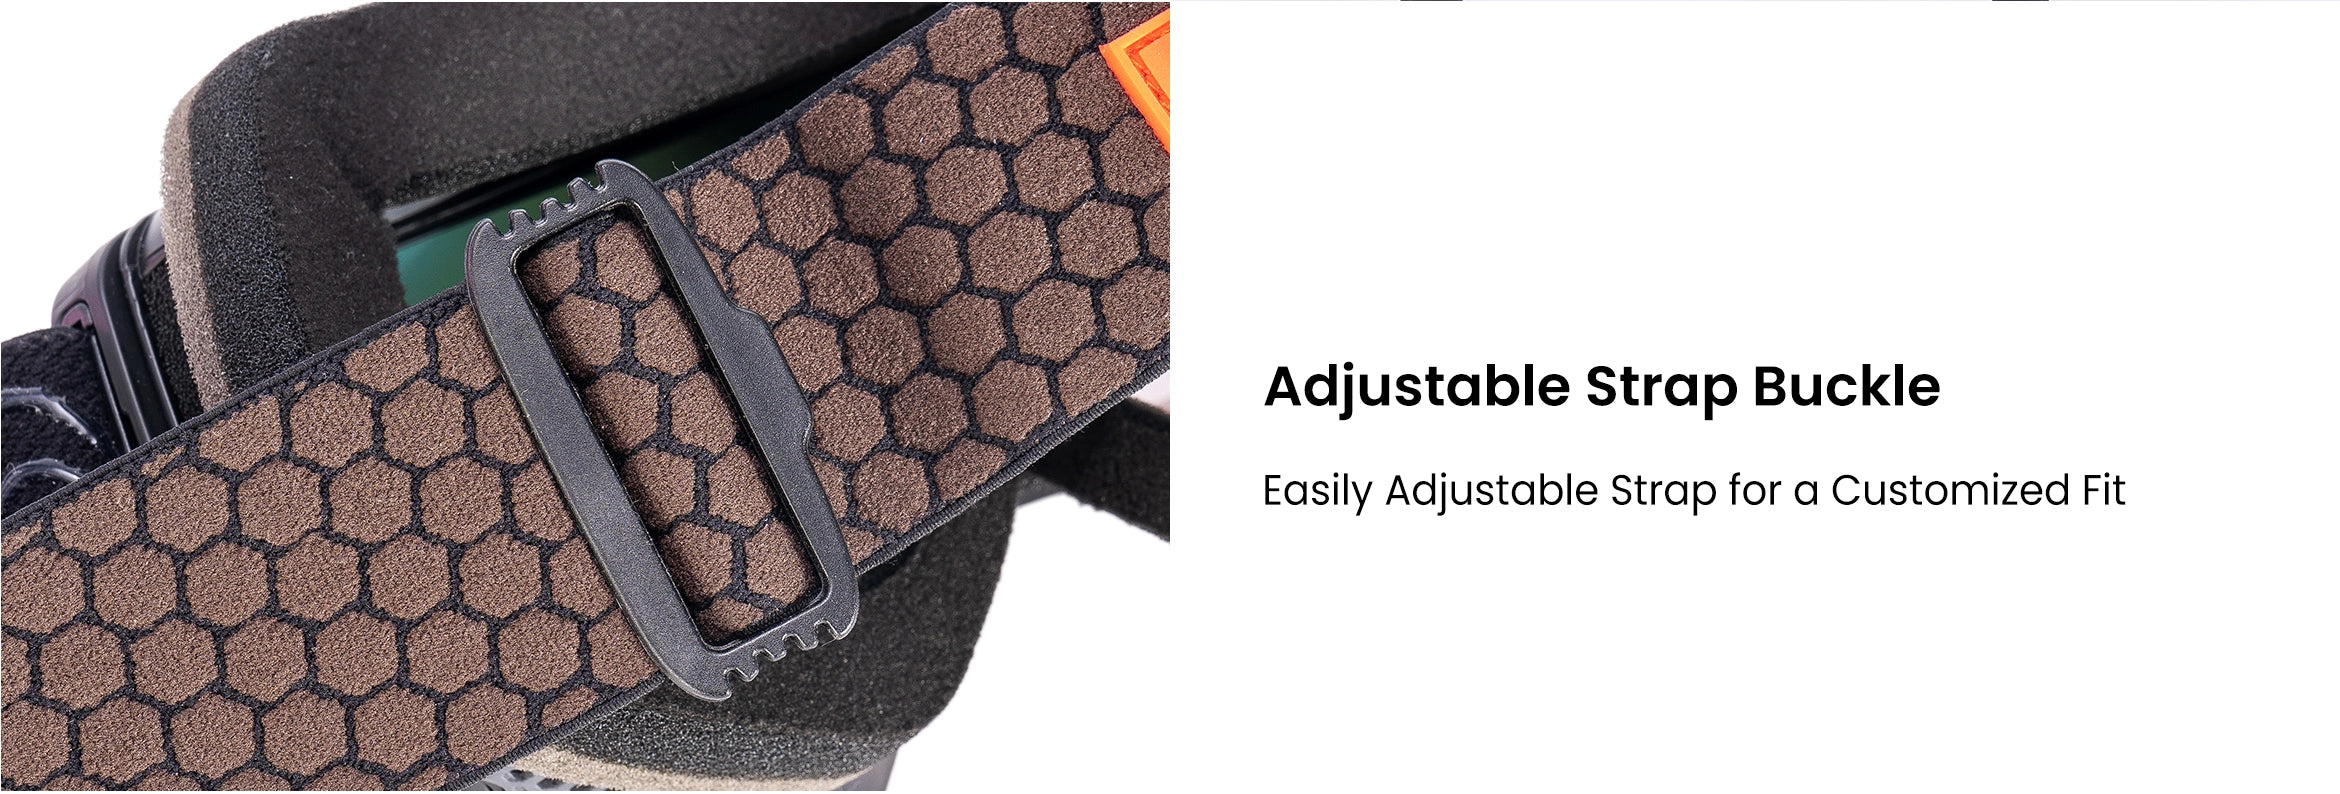 8. Adjustable Strap Buckle